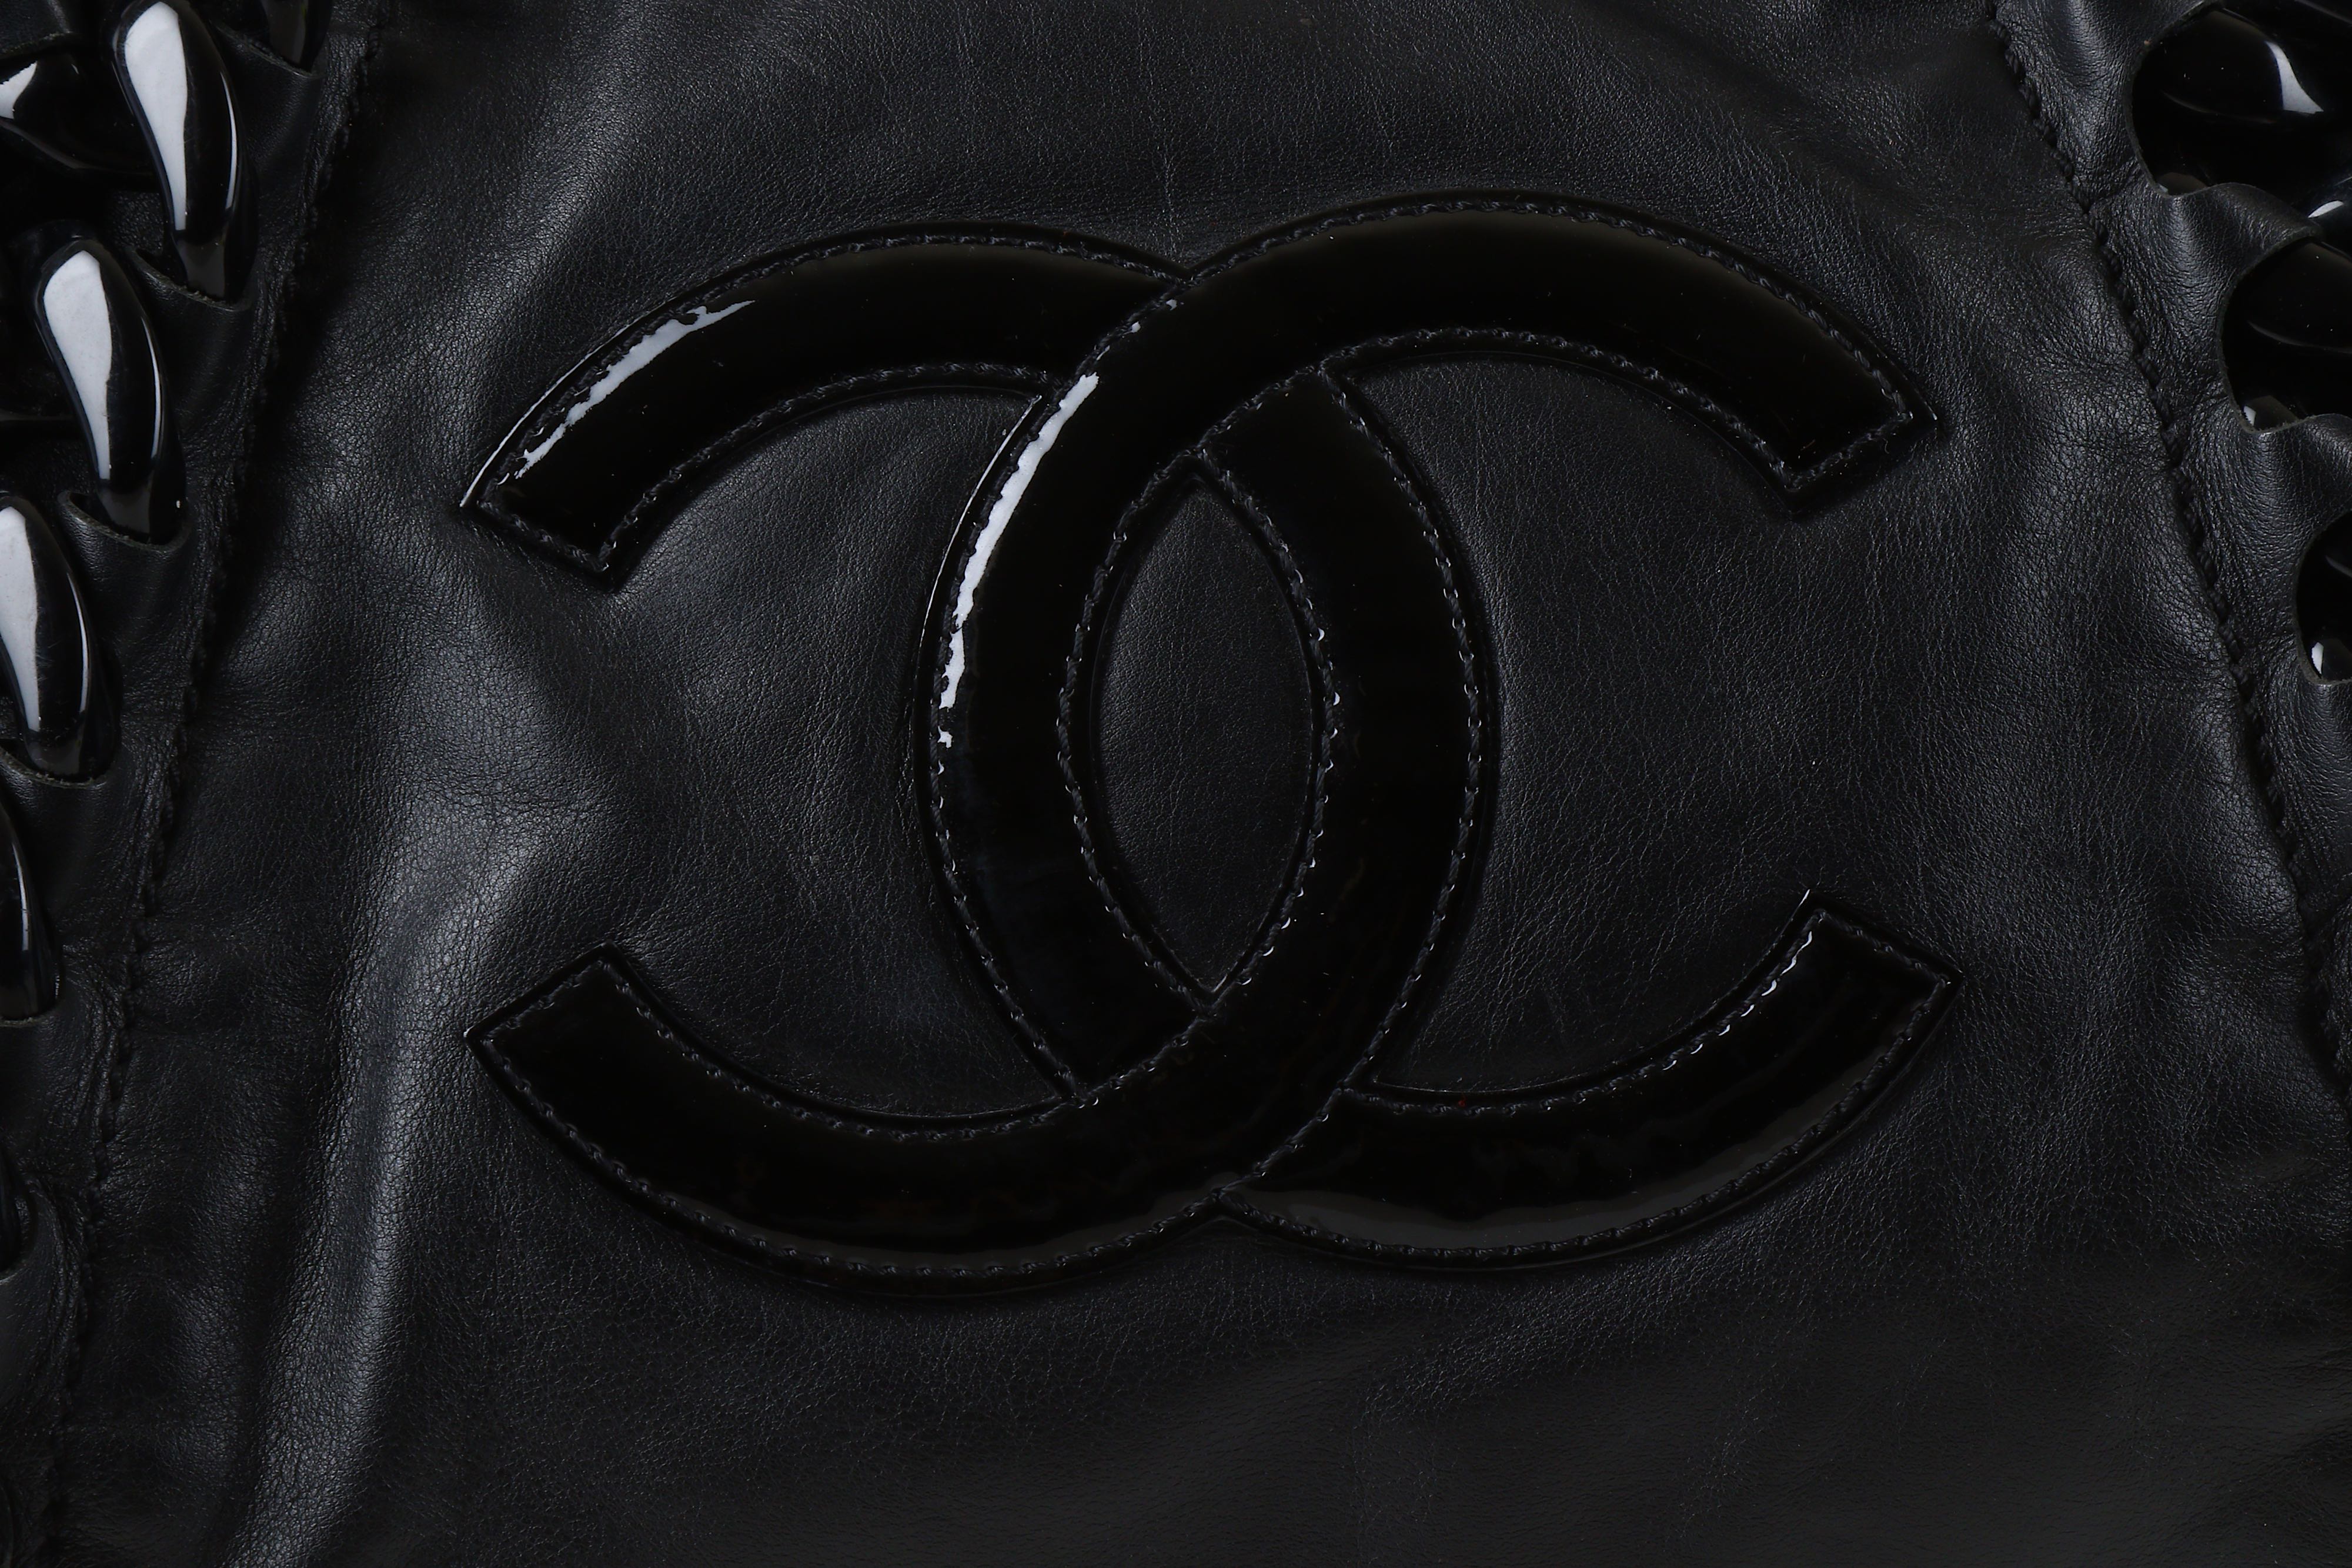 Chanel White Calfskin Leather Rhodoid Modern Chain Tote Bag